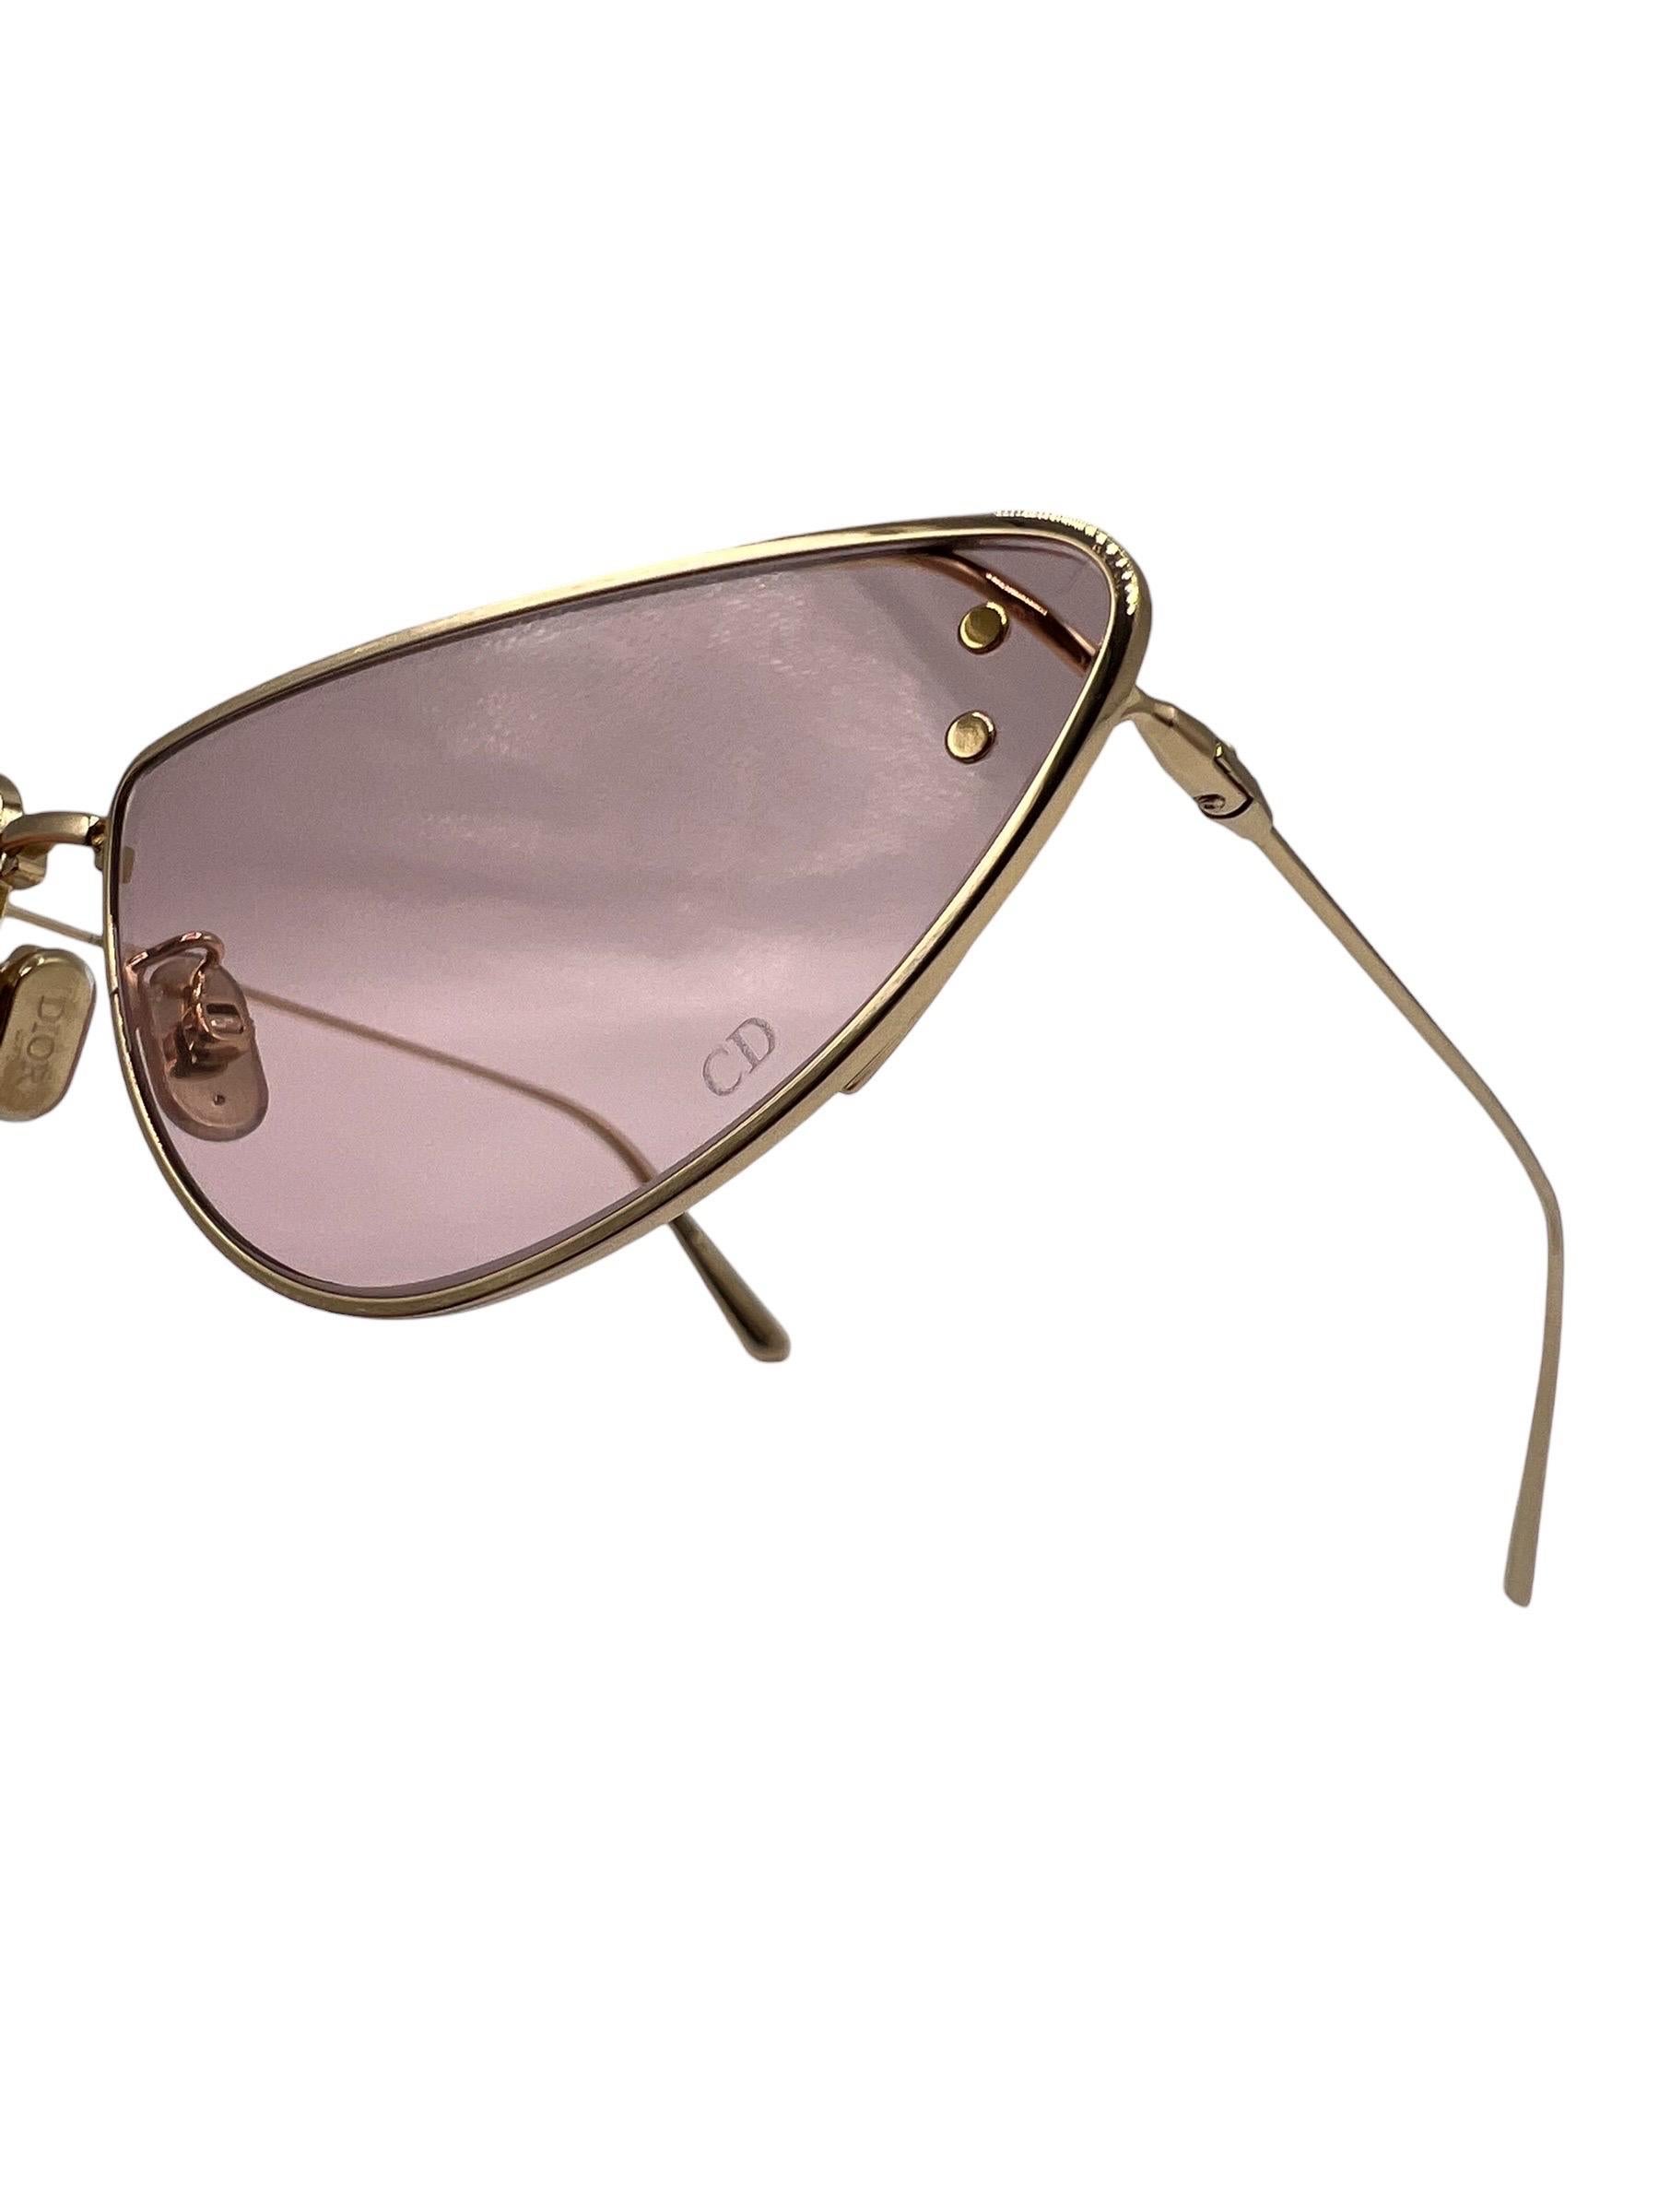 Occhiali firmati Christian Dior, realizzati in metallo placcato oro nella forma irregolare a farfalla. Mit rosafarbenen Linsen und einer gebogenen, schwarzen Struktur, mit dem Logo 